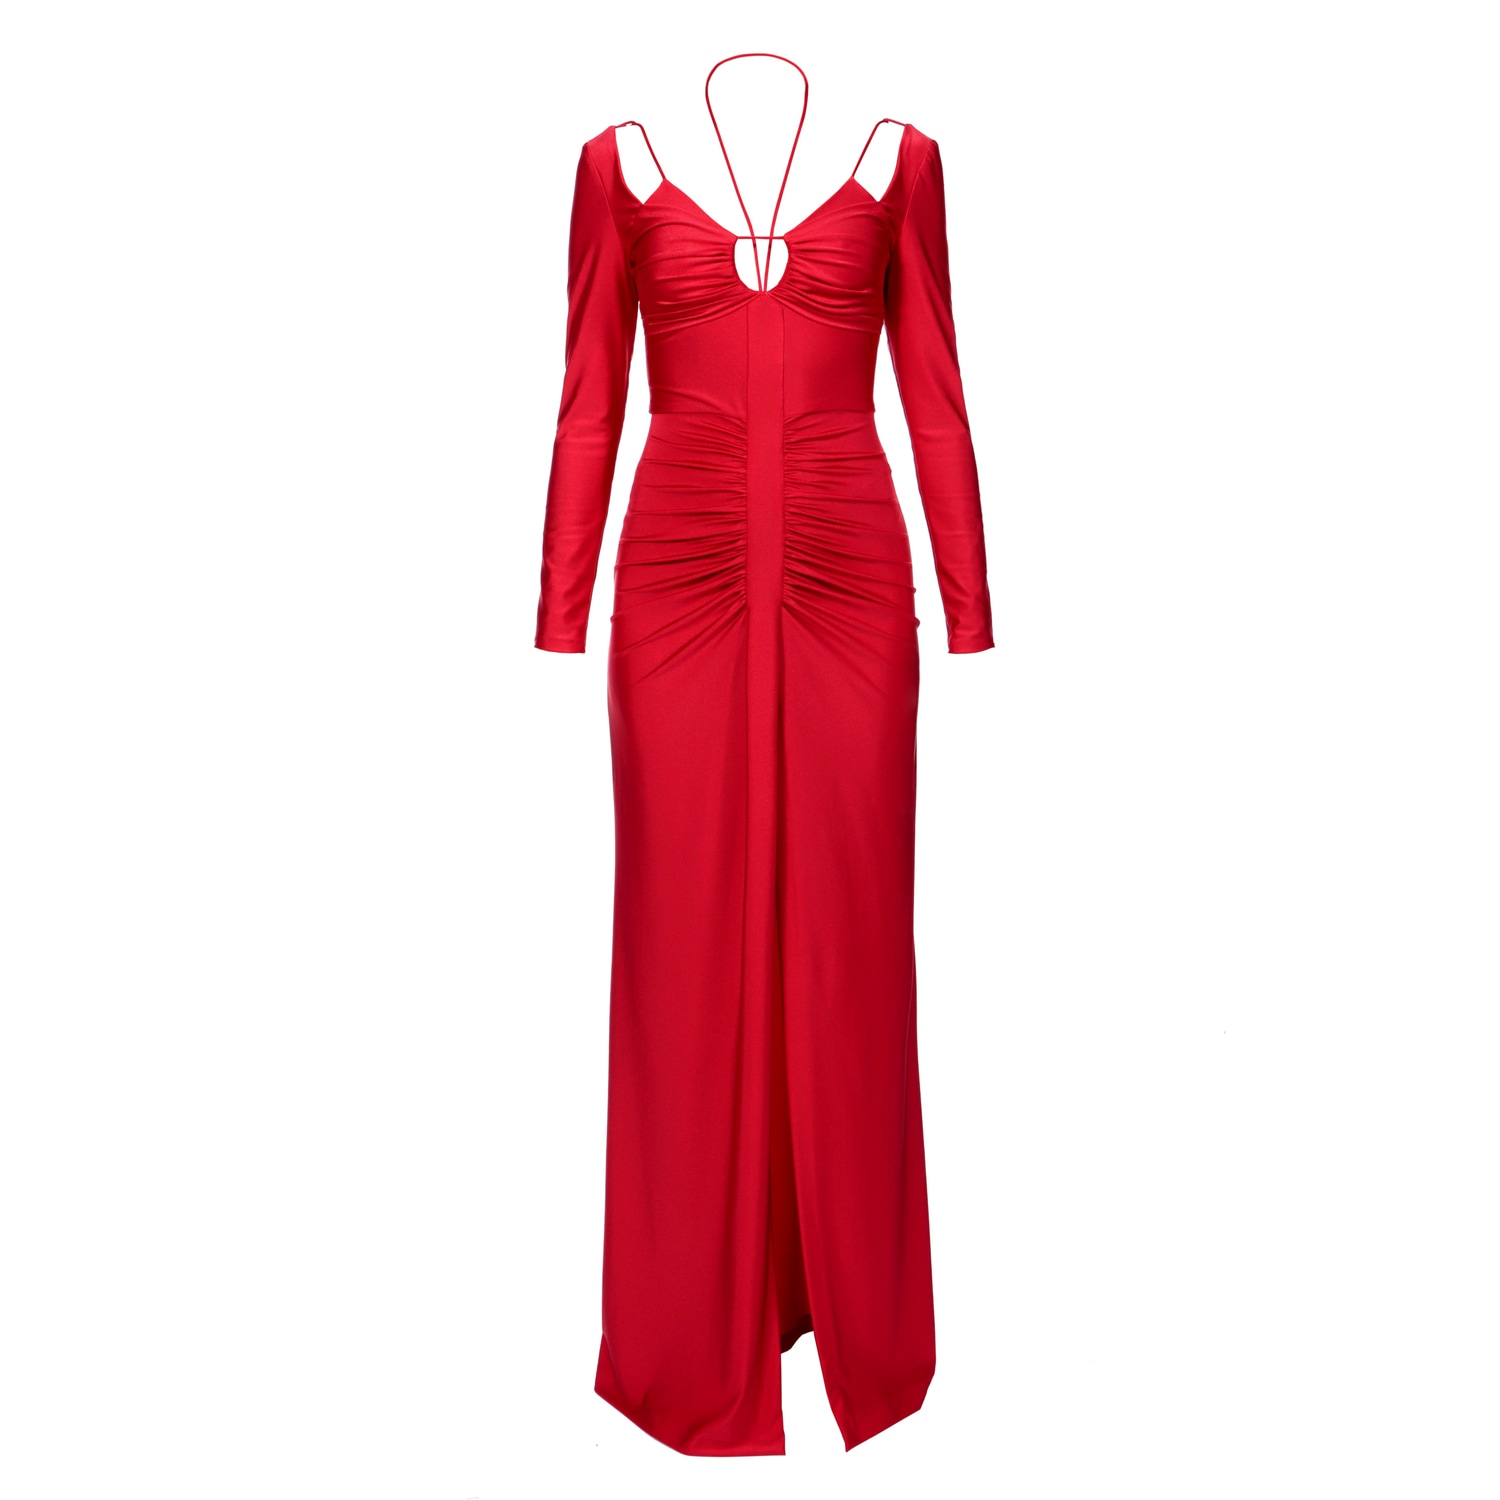 Shop Aggi Women's Dianna Maxi Red Evening Dress